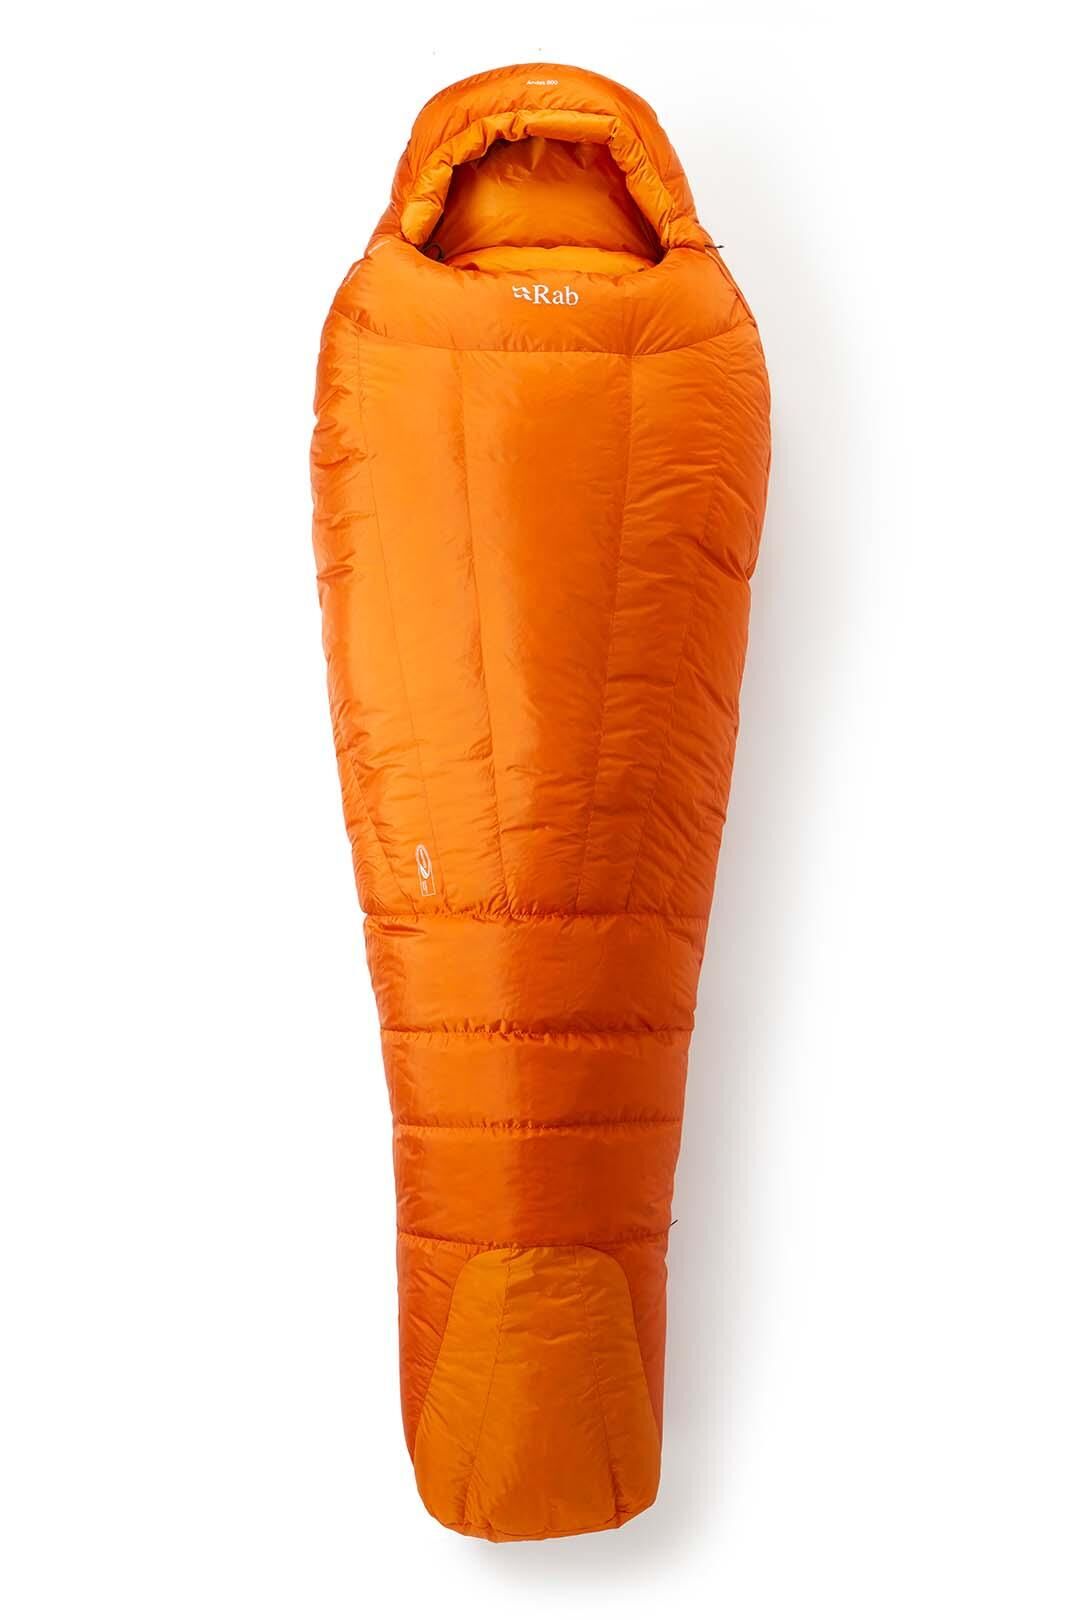 Rab - Andes 800 - Down sleeping bag